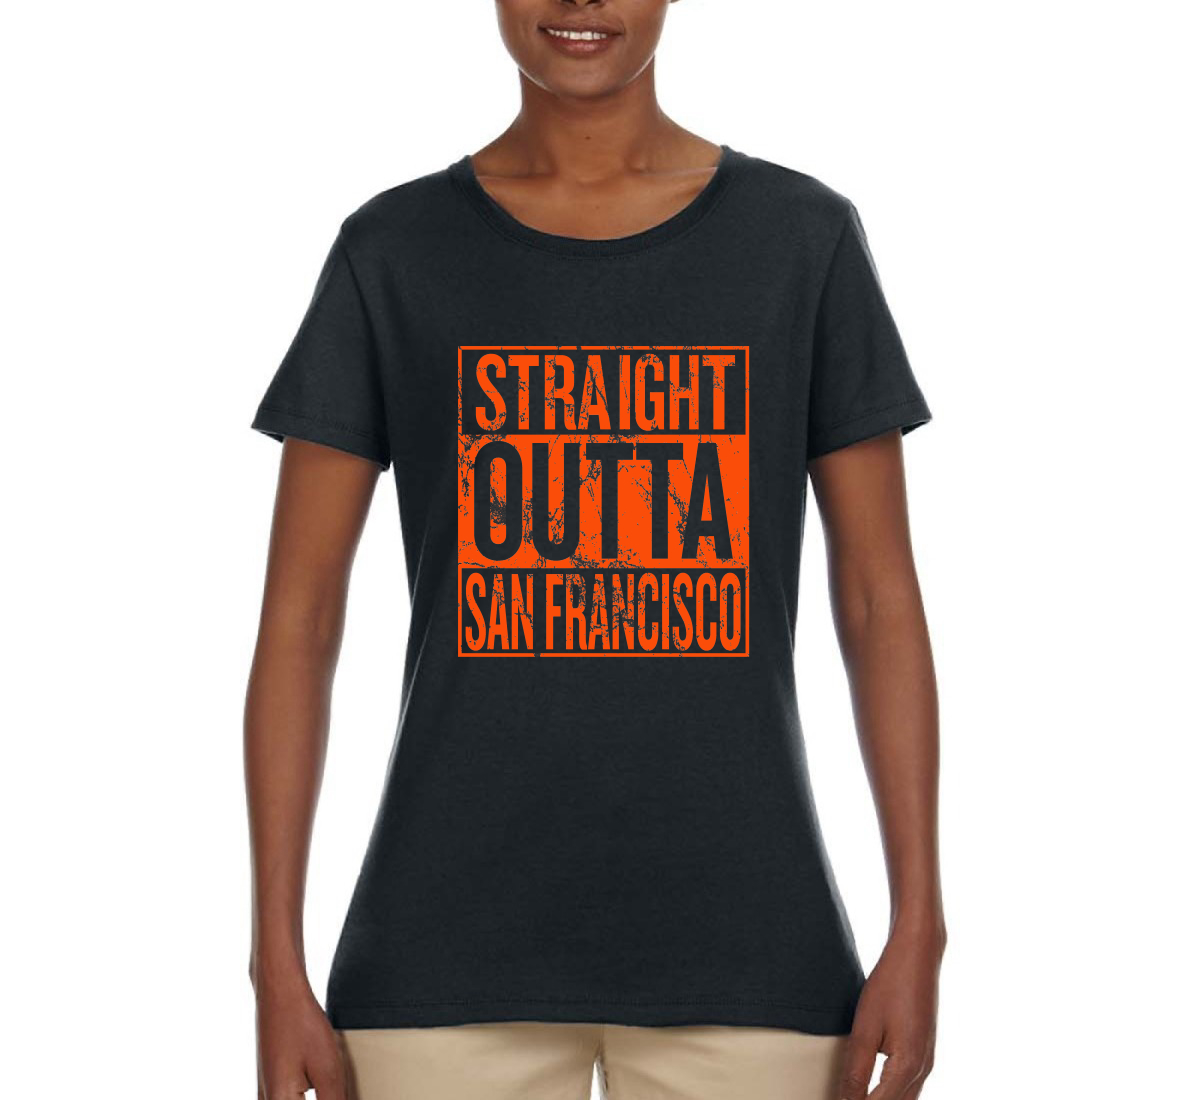 Straight Outta San Francisco SF Fan | Fantasy Baseball Fans | Womens Sports Graphic T-Shirt, Black, X-Large - image 2 of 4